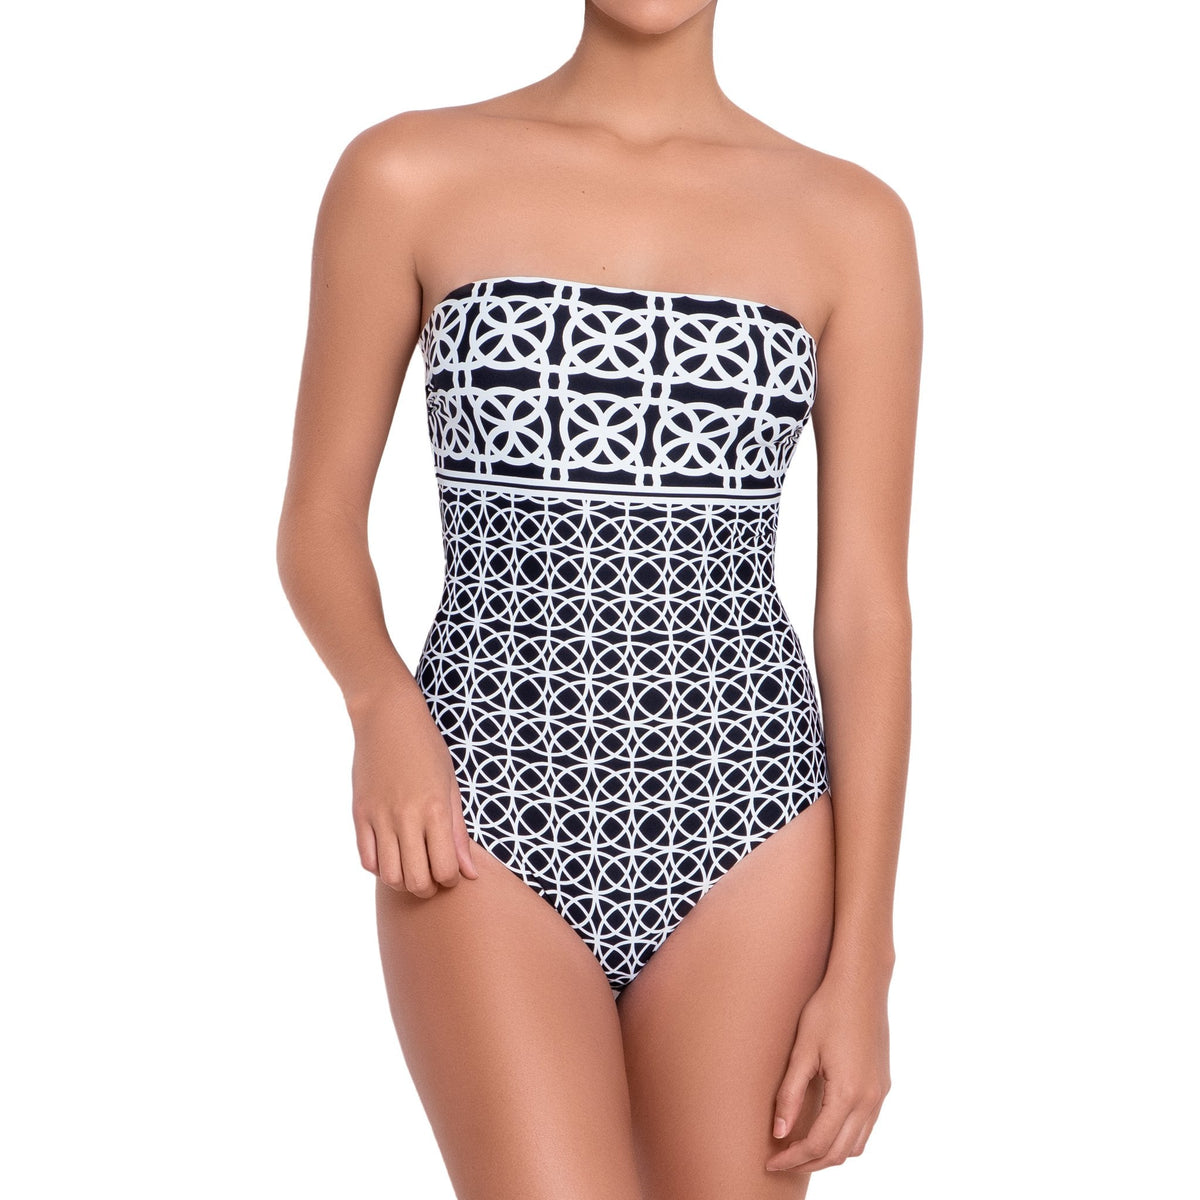 BRIGITTE bandeau one piece, printed swimsuit by ALMA swimwear ‚Äì front view 2